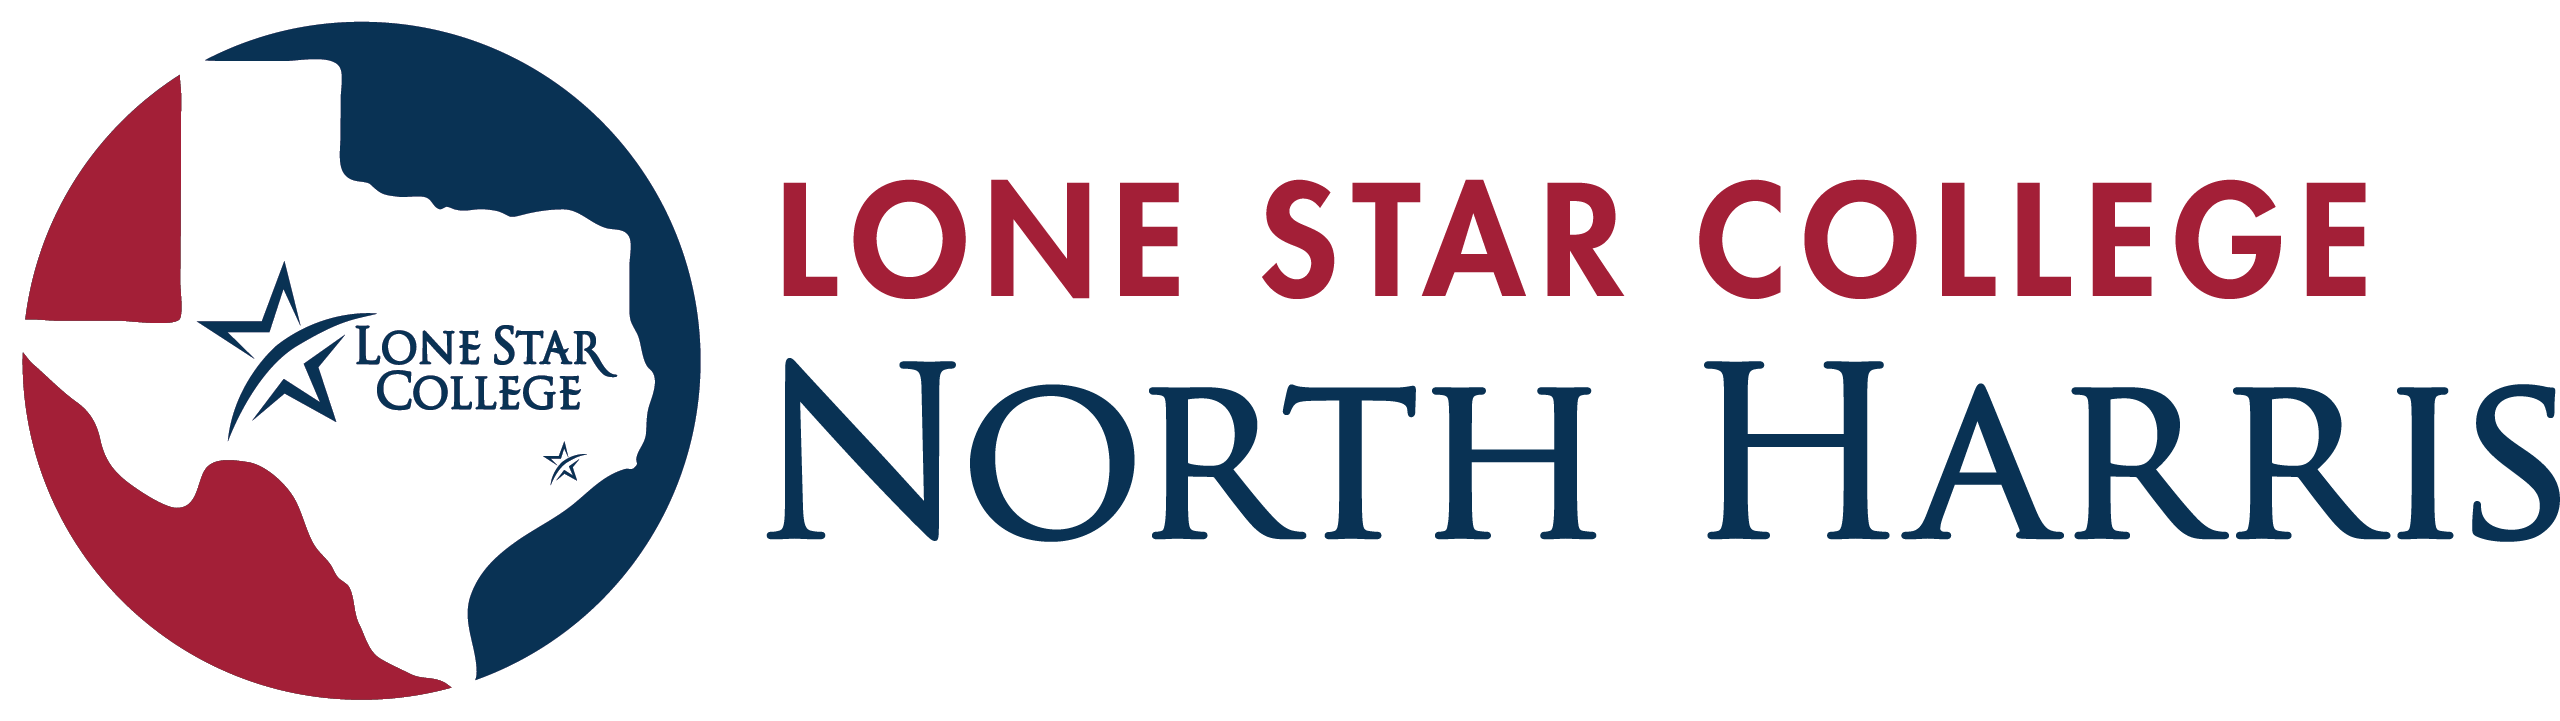 LoneStarCollege-North Harris_Logo_Horizontal_540_201